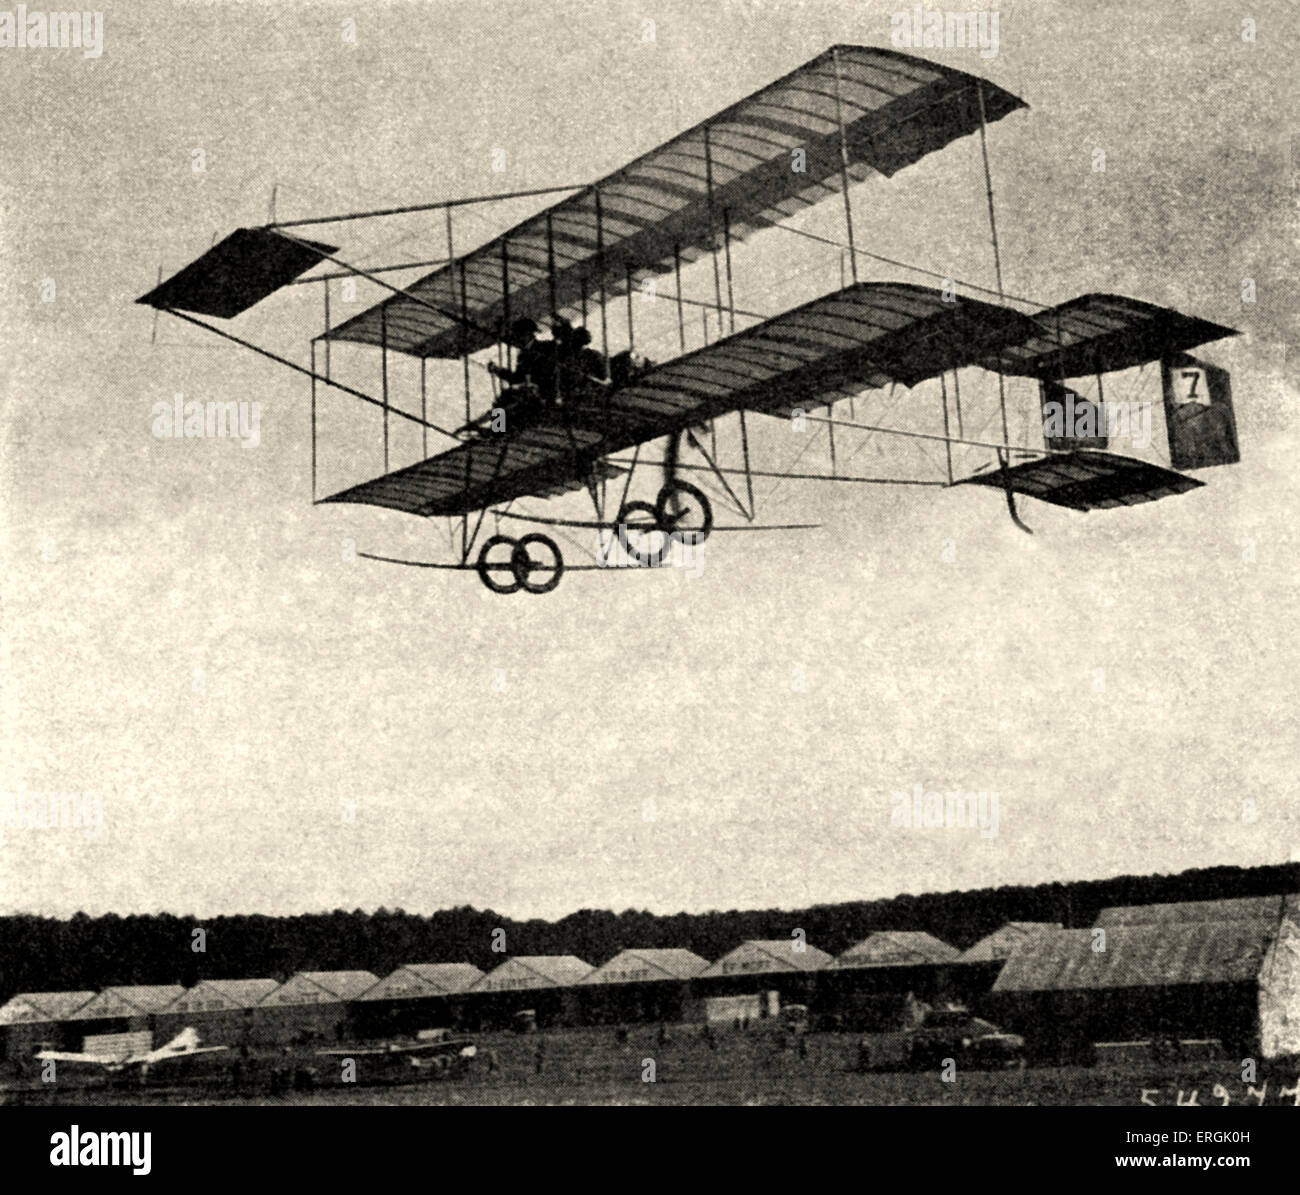 Biplane, early 20th century. Stock Photo